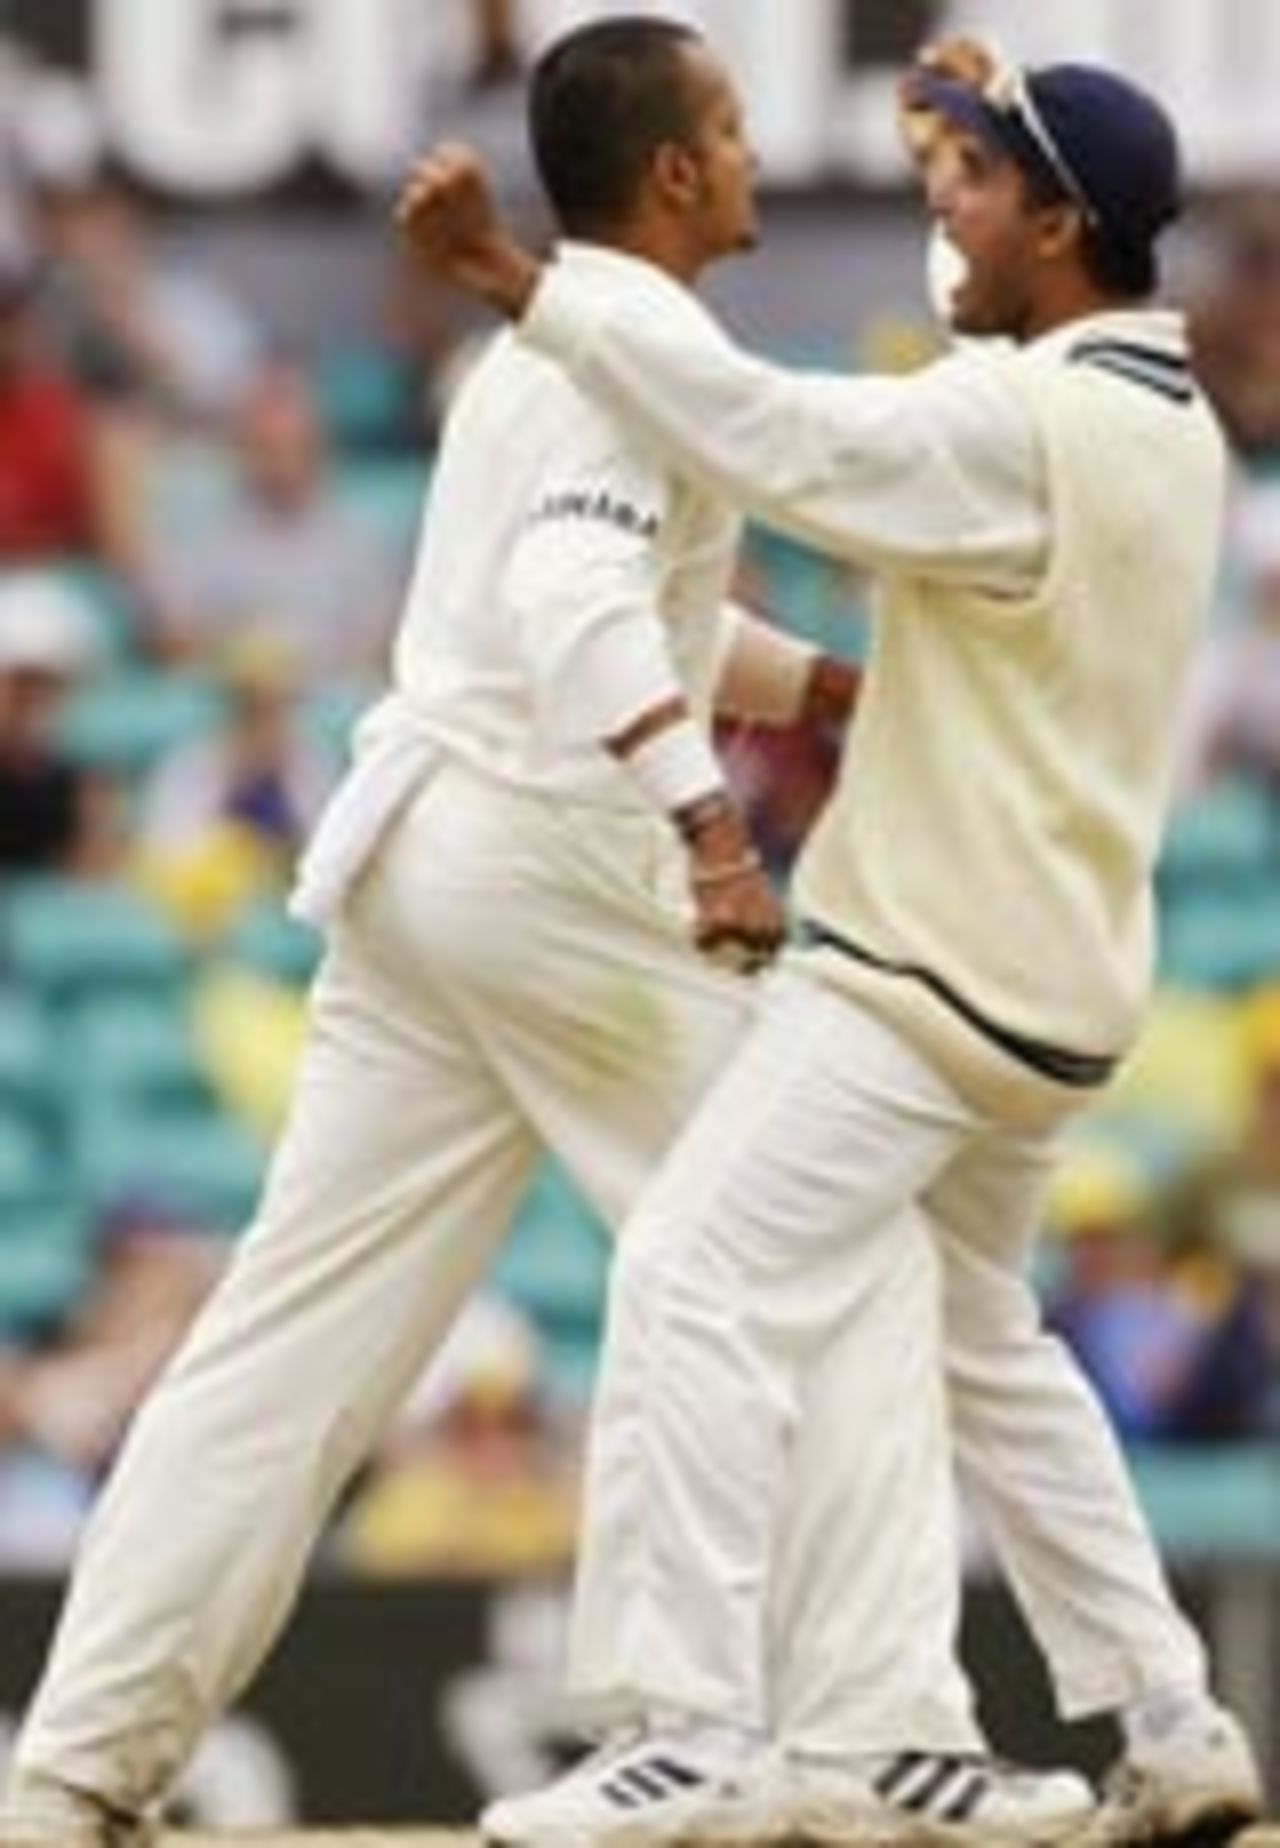 Murali Kartik and Sourav Ganguly celebrate Justin Langer's wicket, Australia v India, 4th Test, Sydney, 5th day, January 6, 2004